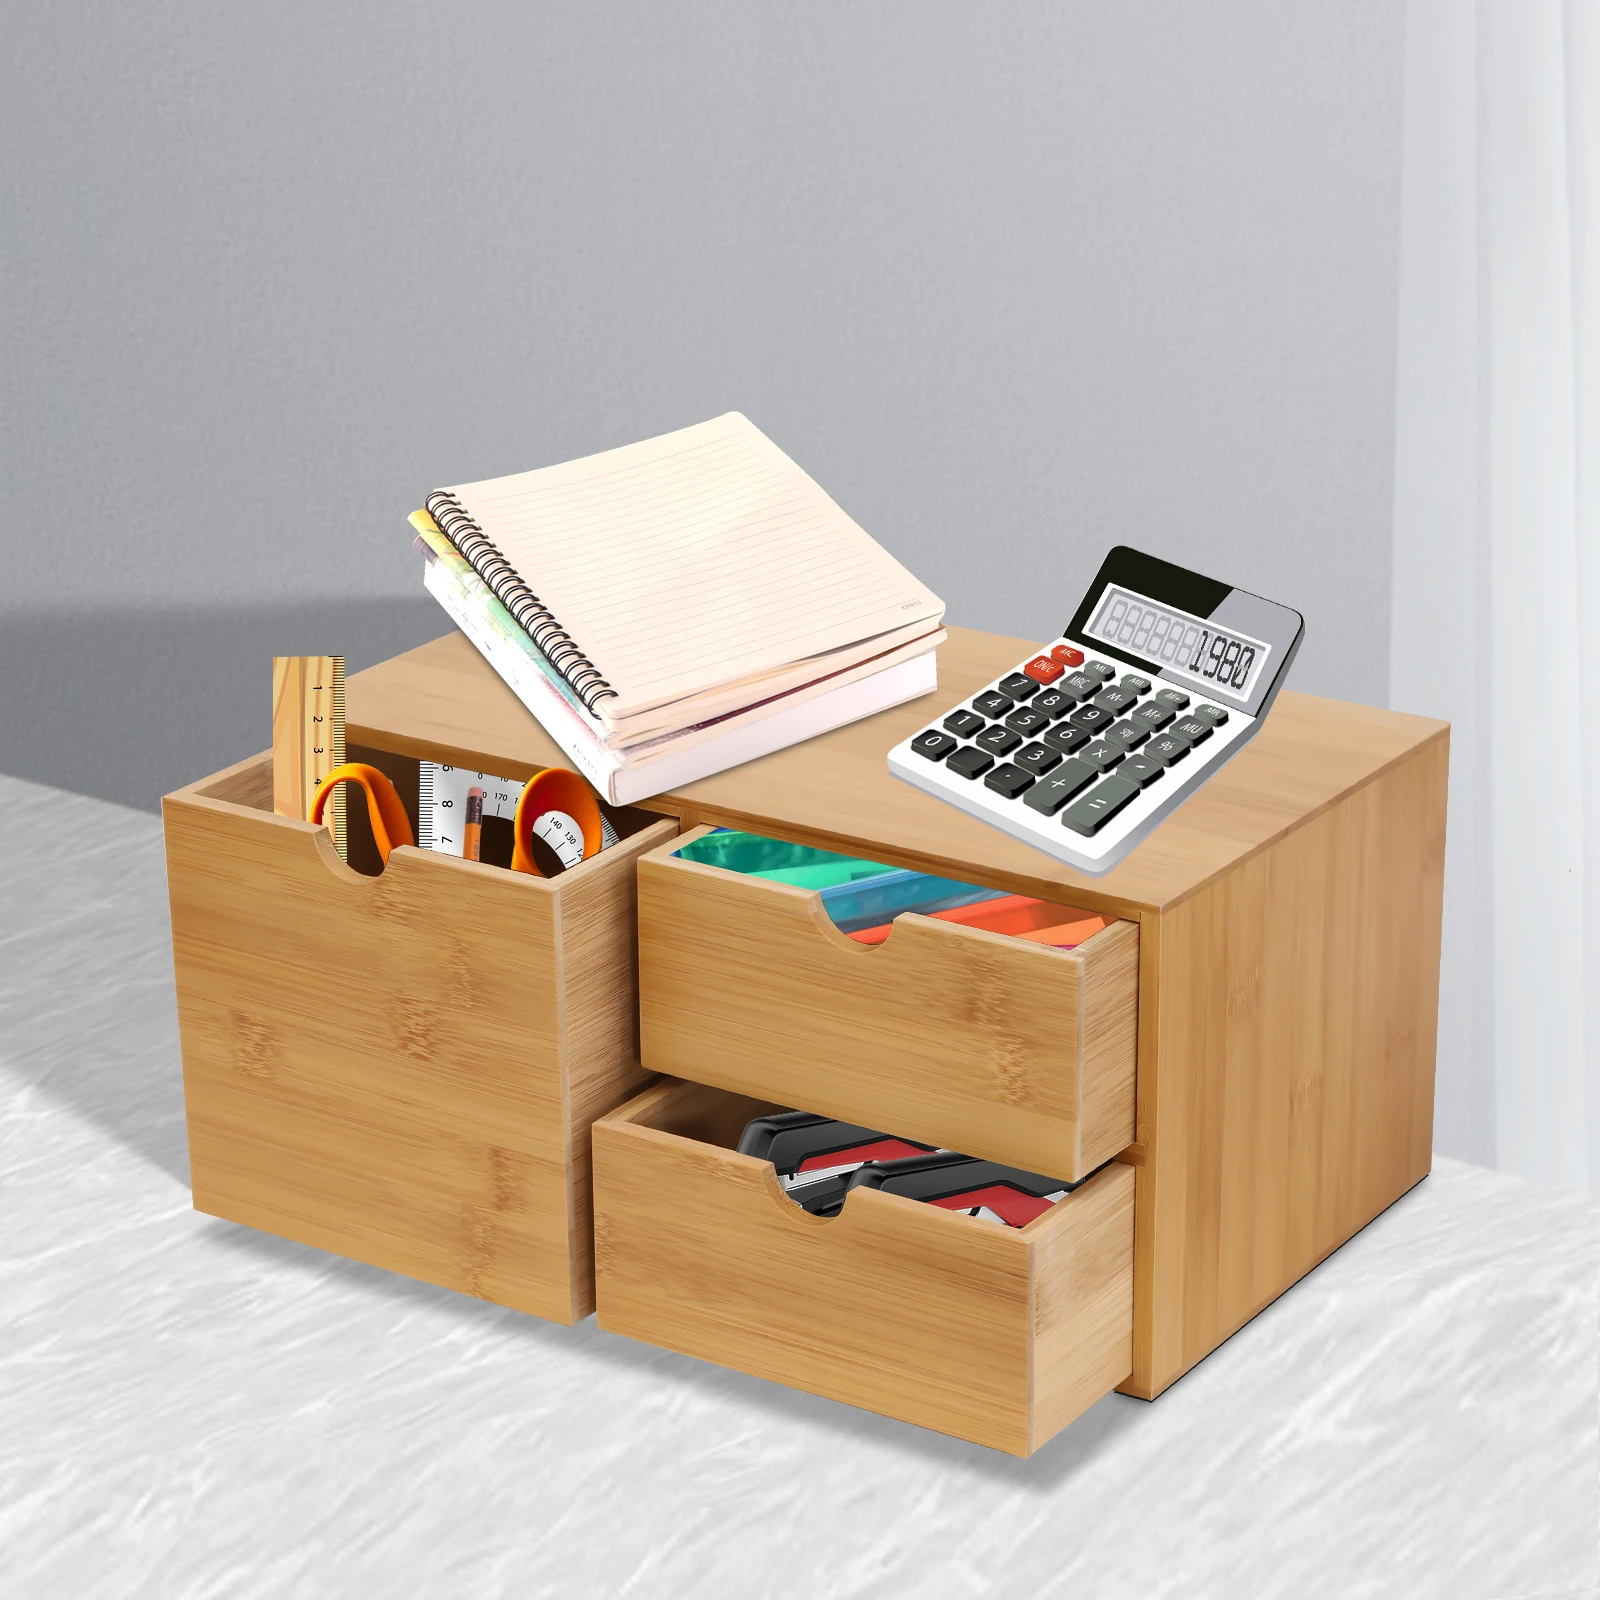 Bamboo Desk Organizer, Mini Drawer, Tabletop Storage, Organization Box for Office, Home, Toiletries Supplies, No Attachment